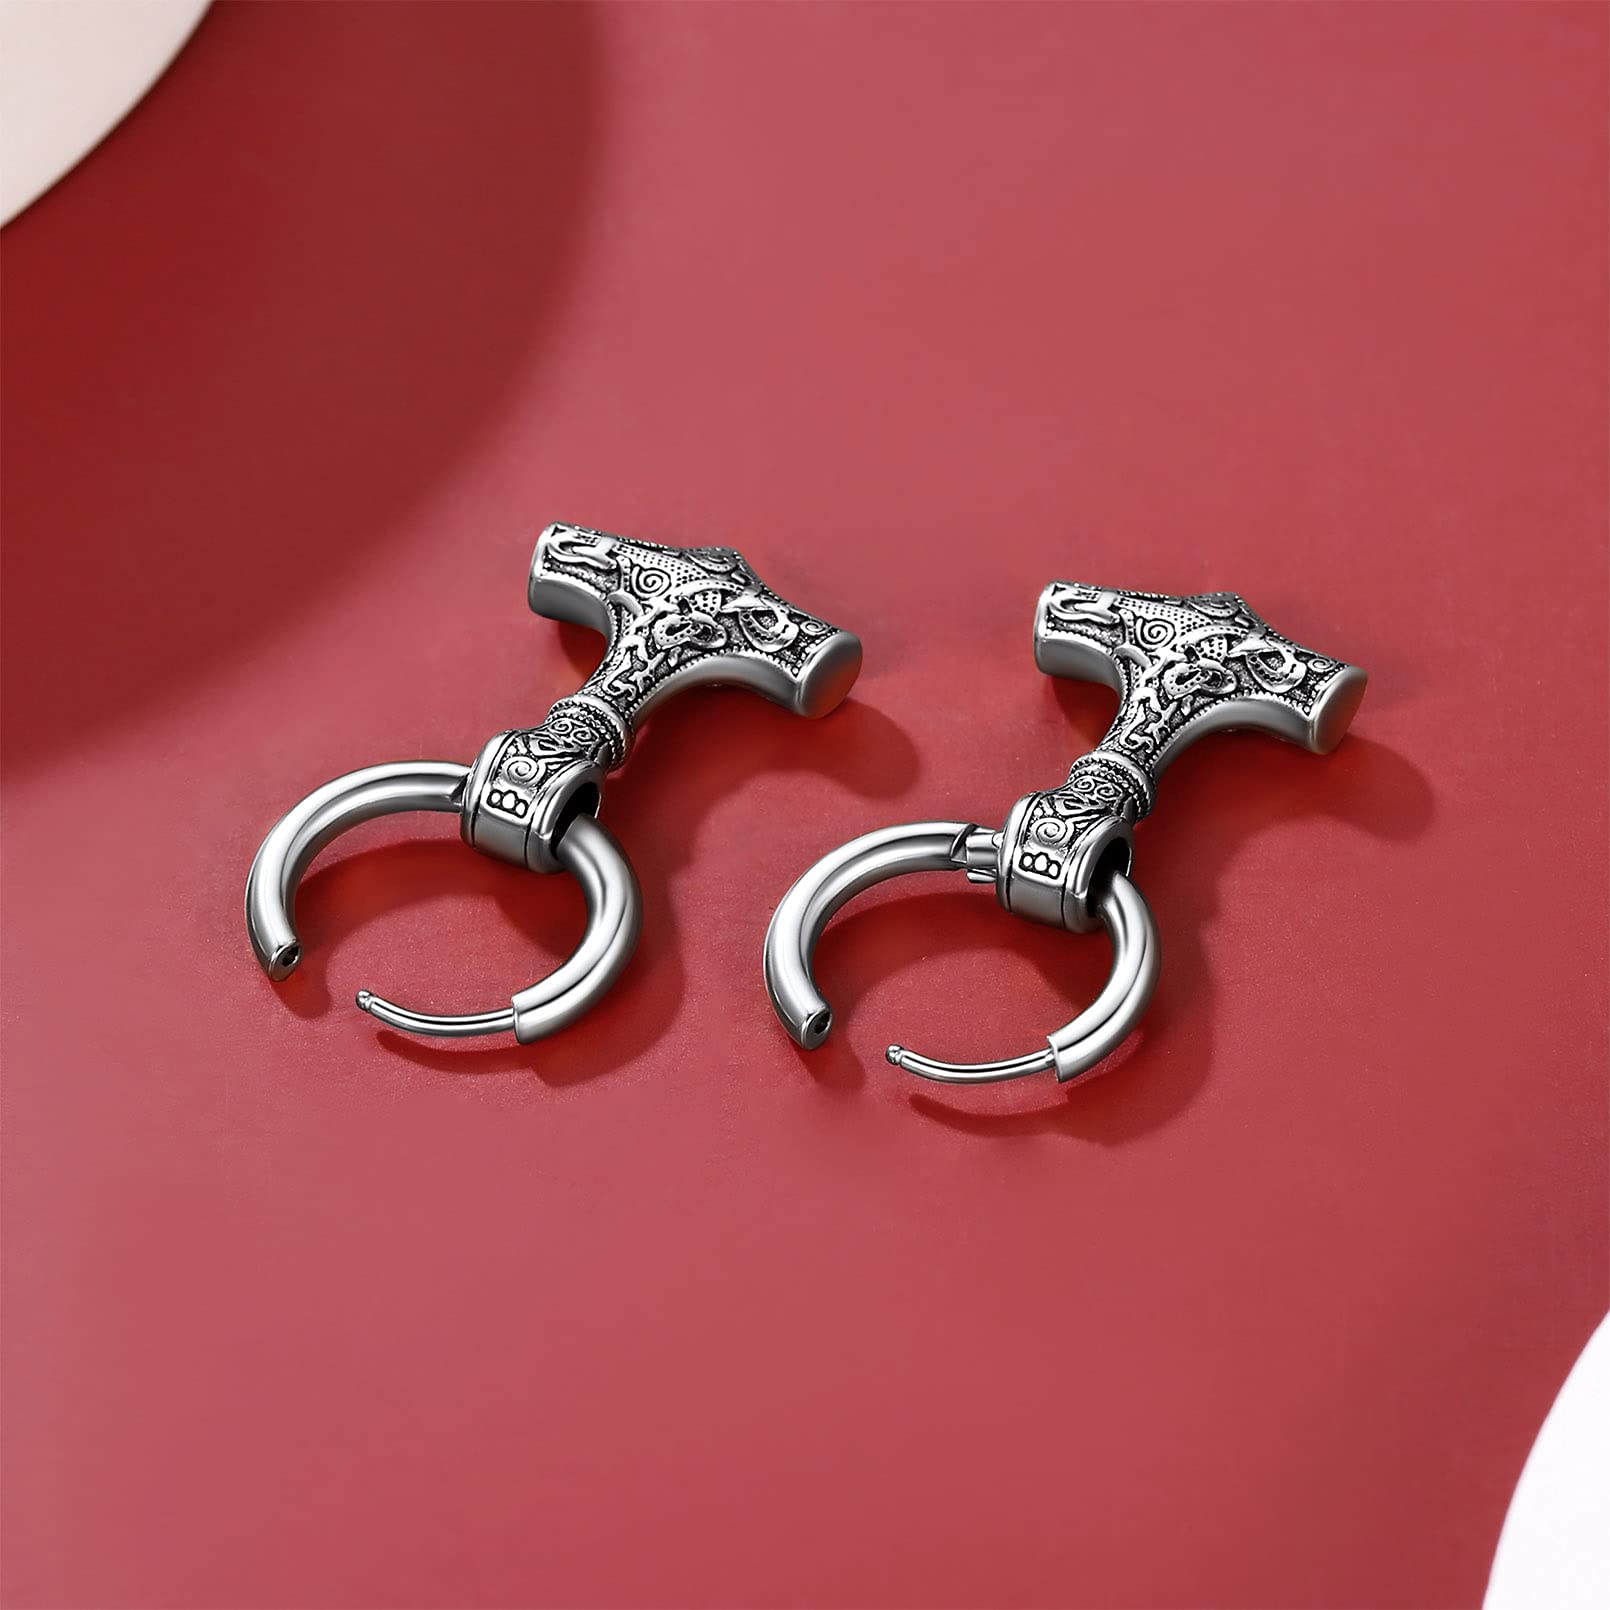 FaithHeart Viking Thors Hammer/Axe/Spear Head Earrings for Women Men Stainless Steel/18K Gold Plated Drop Earring Jewelry Gift Packaging